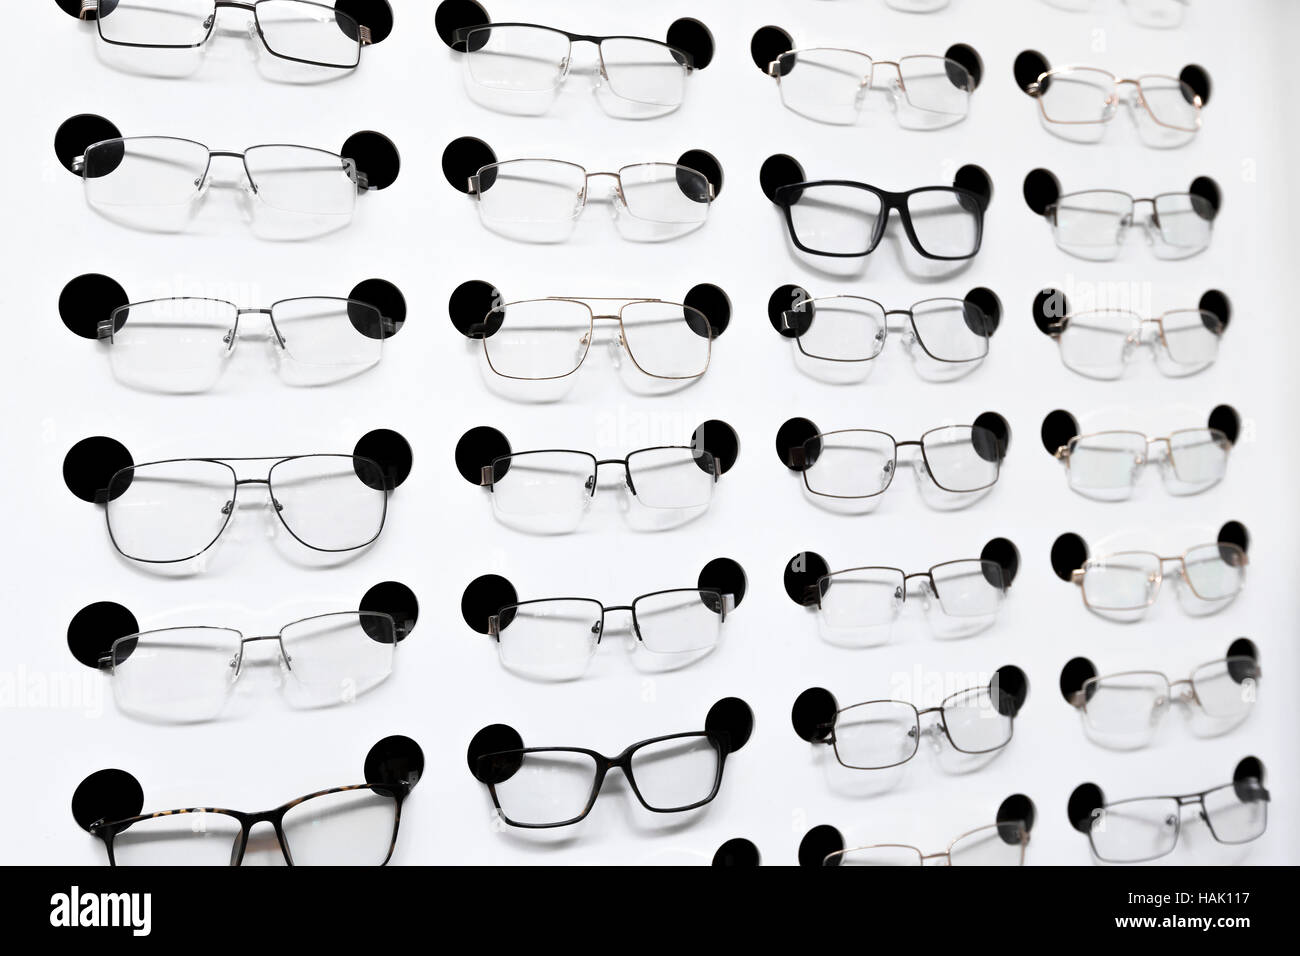 eye glasses on the shelf in shop Stock Photo